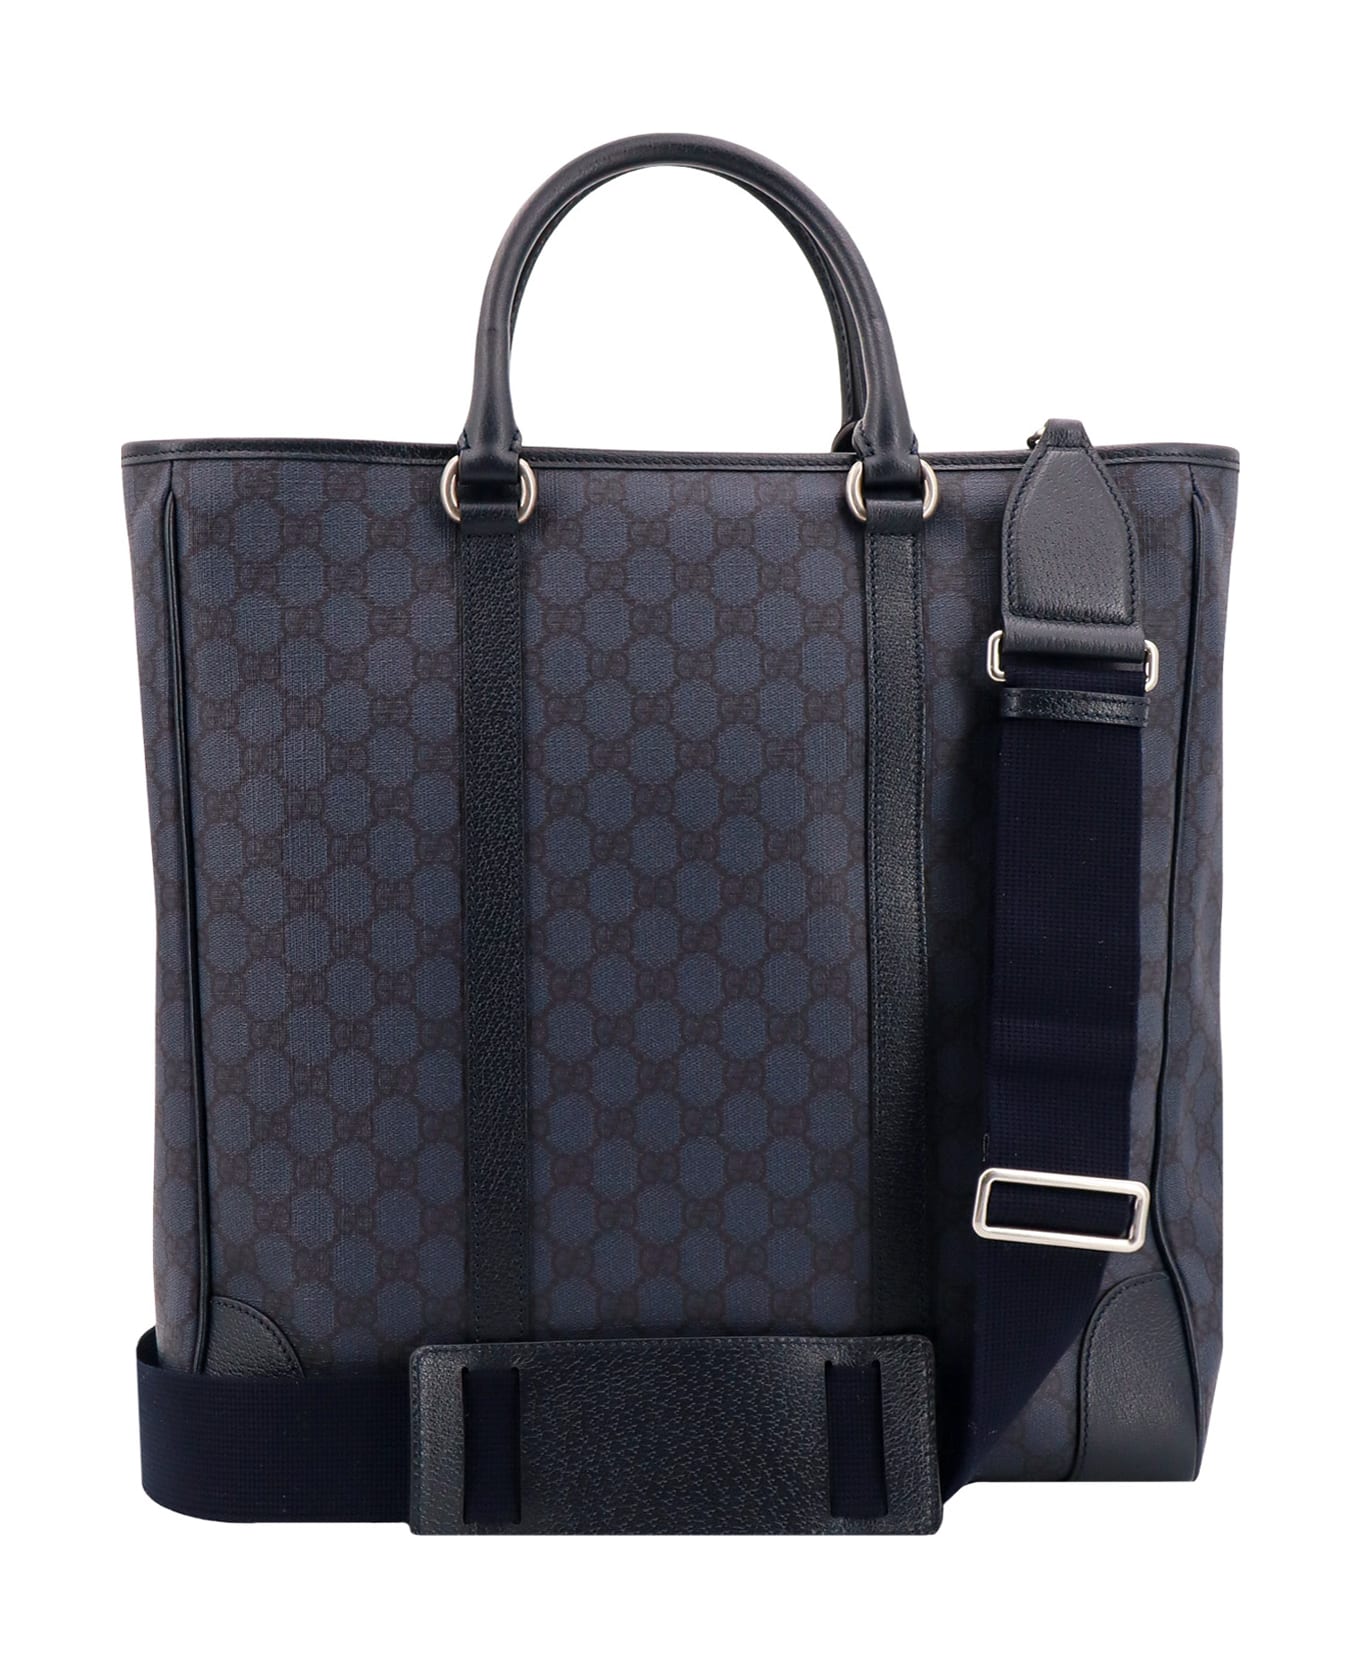 Gucci Ophidia Handbag - Blue